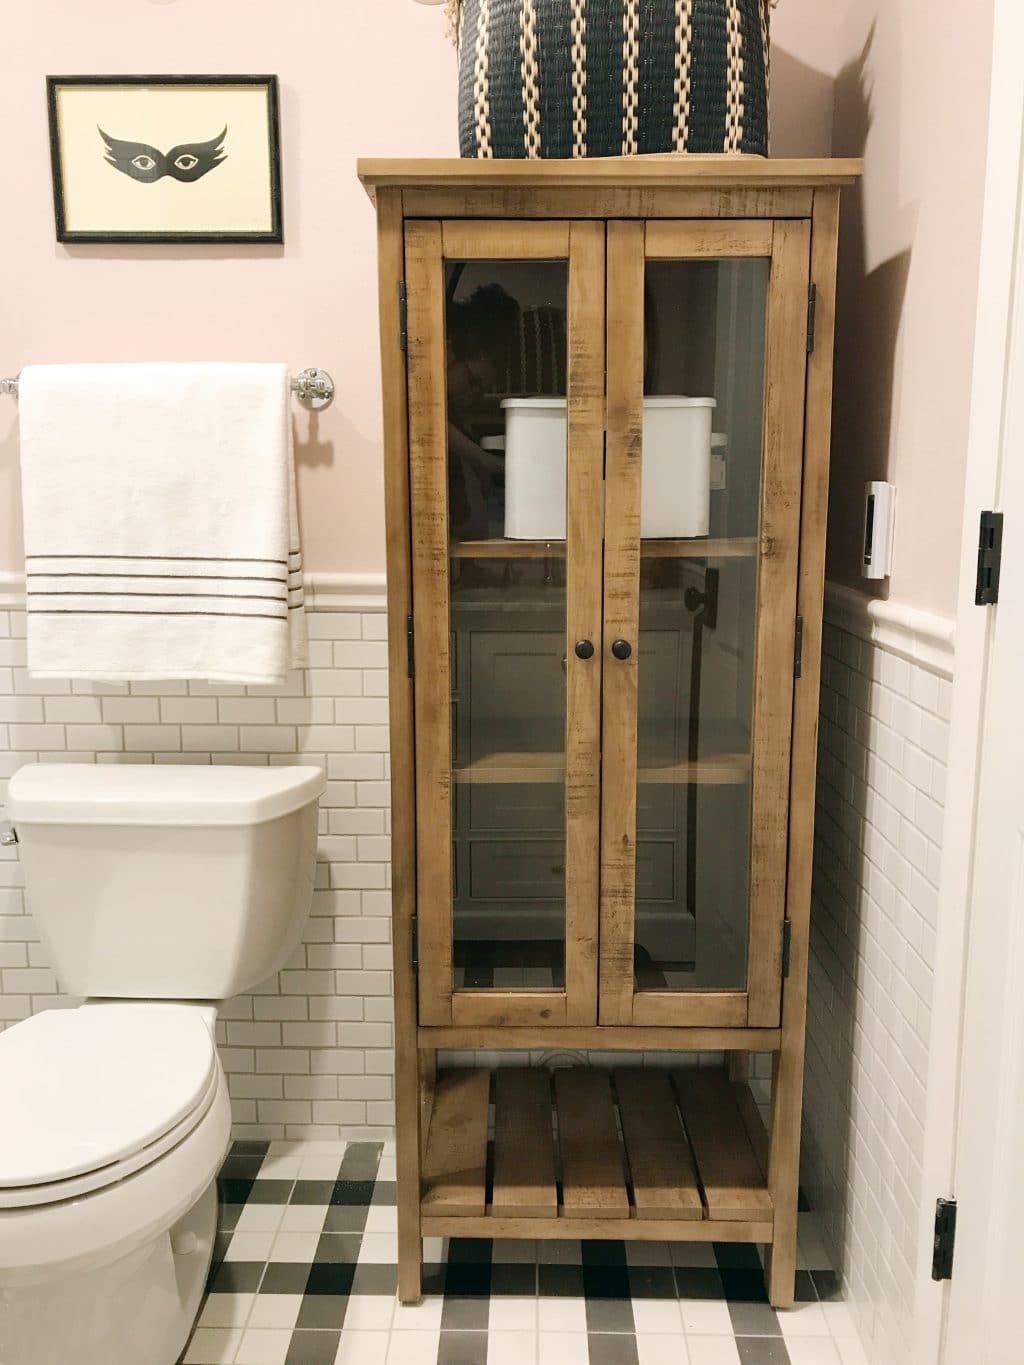 IDEALHOUSE Bathroom Cabinet, Freestanding Floor Linen Storage Cabinet, Kitchen Pantry Storage Cabinet with Glass Doors & Adjustable Shelves